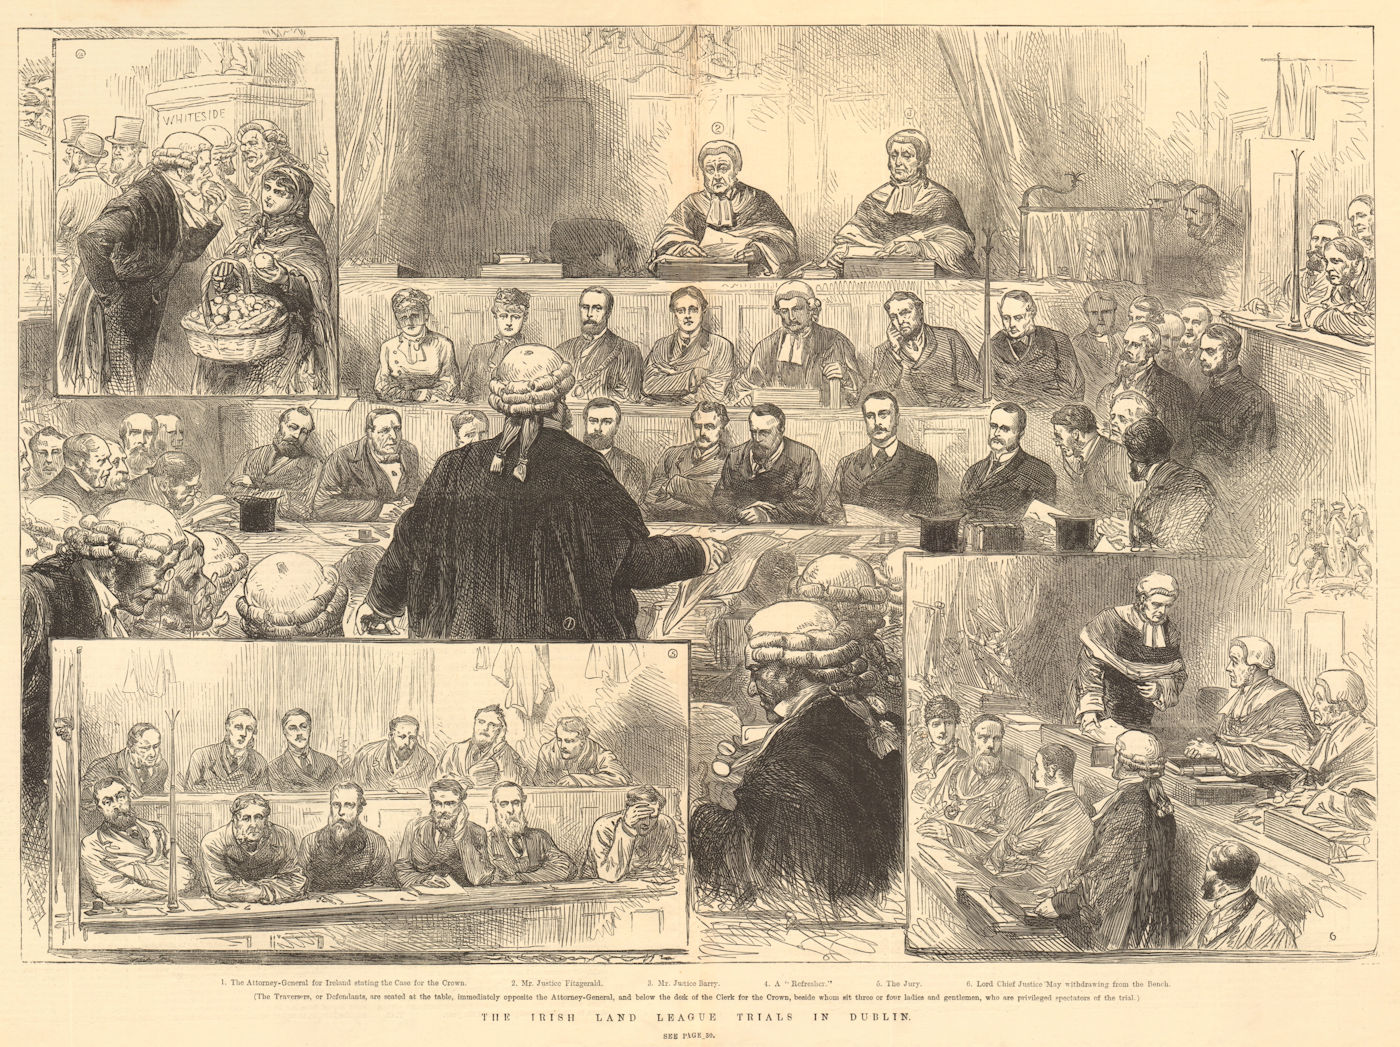 The Irish Land League trials in Dublin. Ireland 1881 antique ILN full page